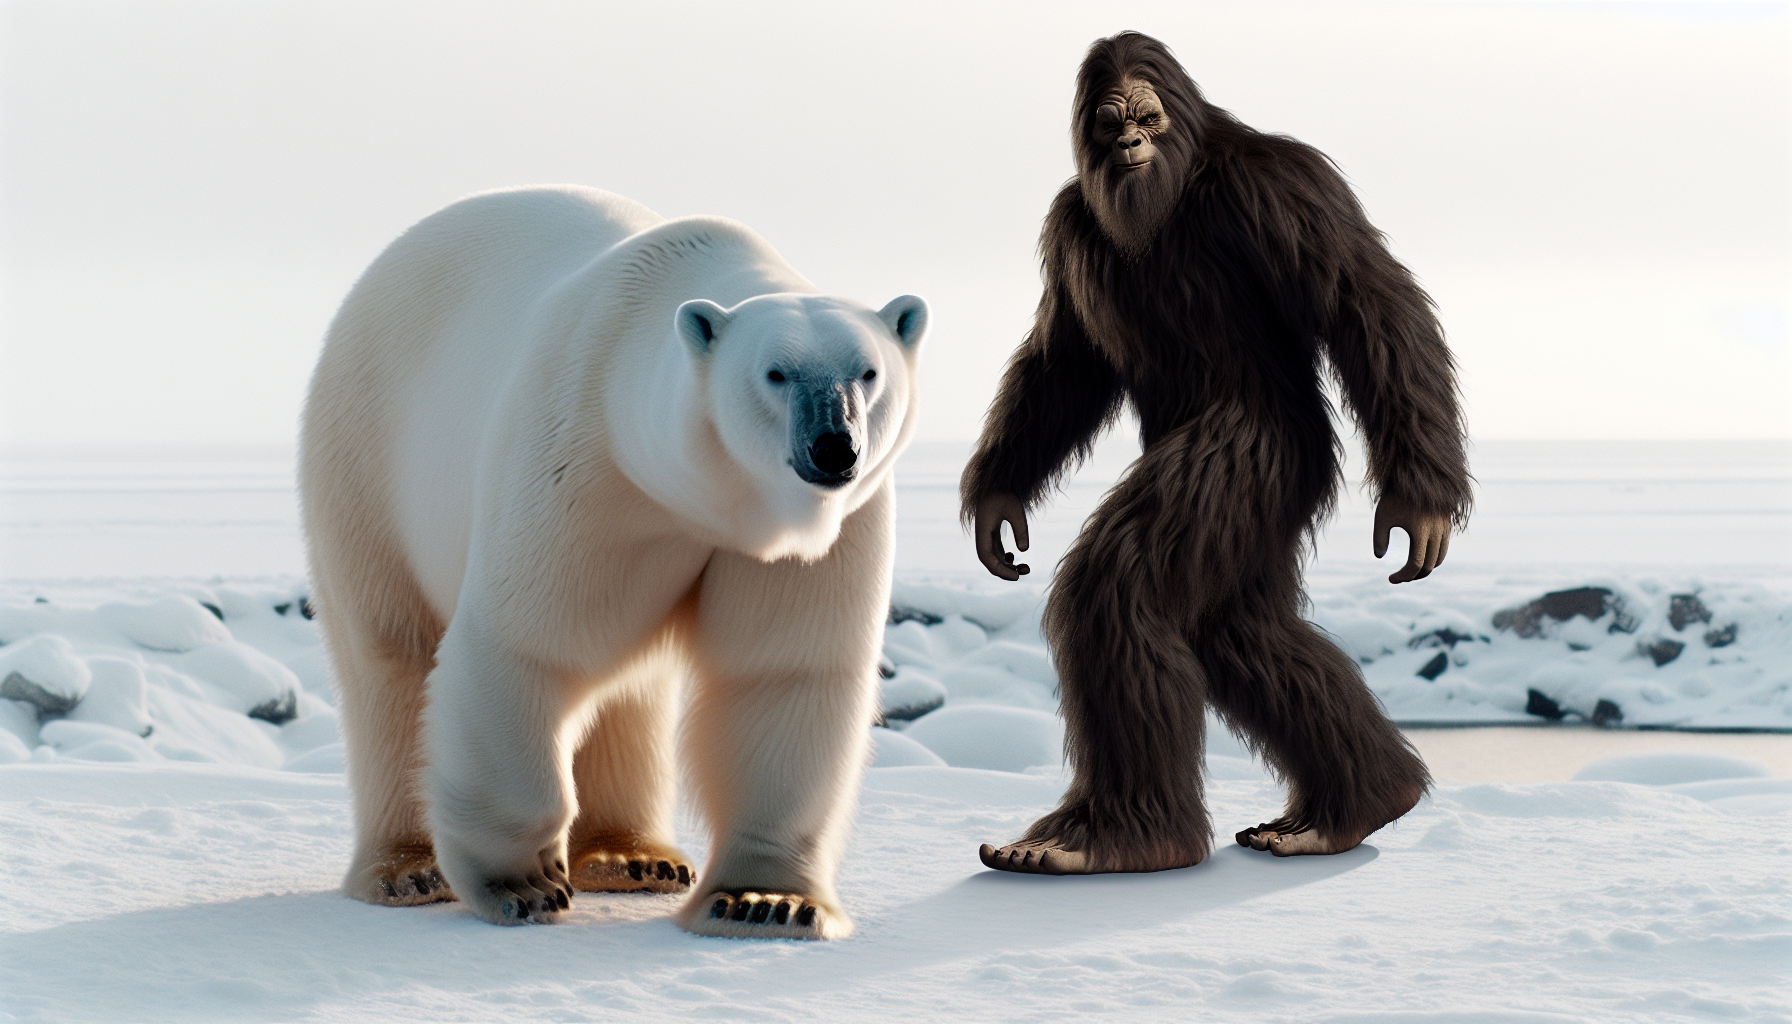 Comparison between a polar bear and a hypothetical Bigfoot